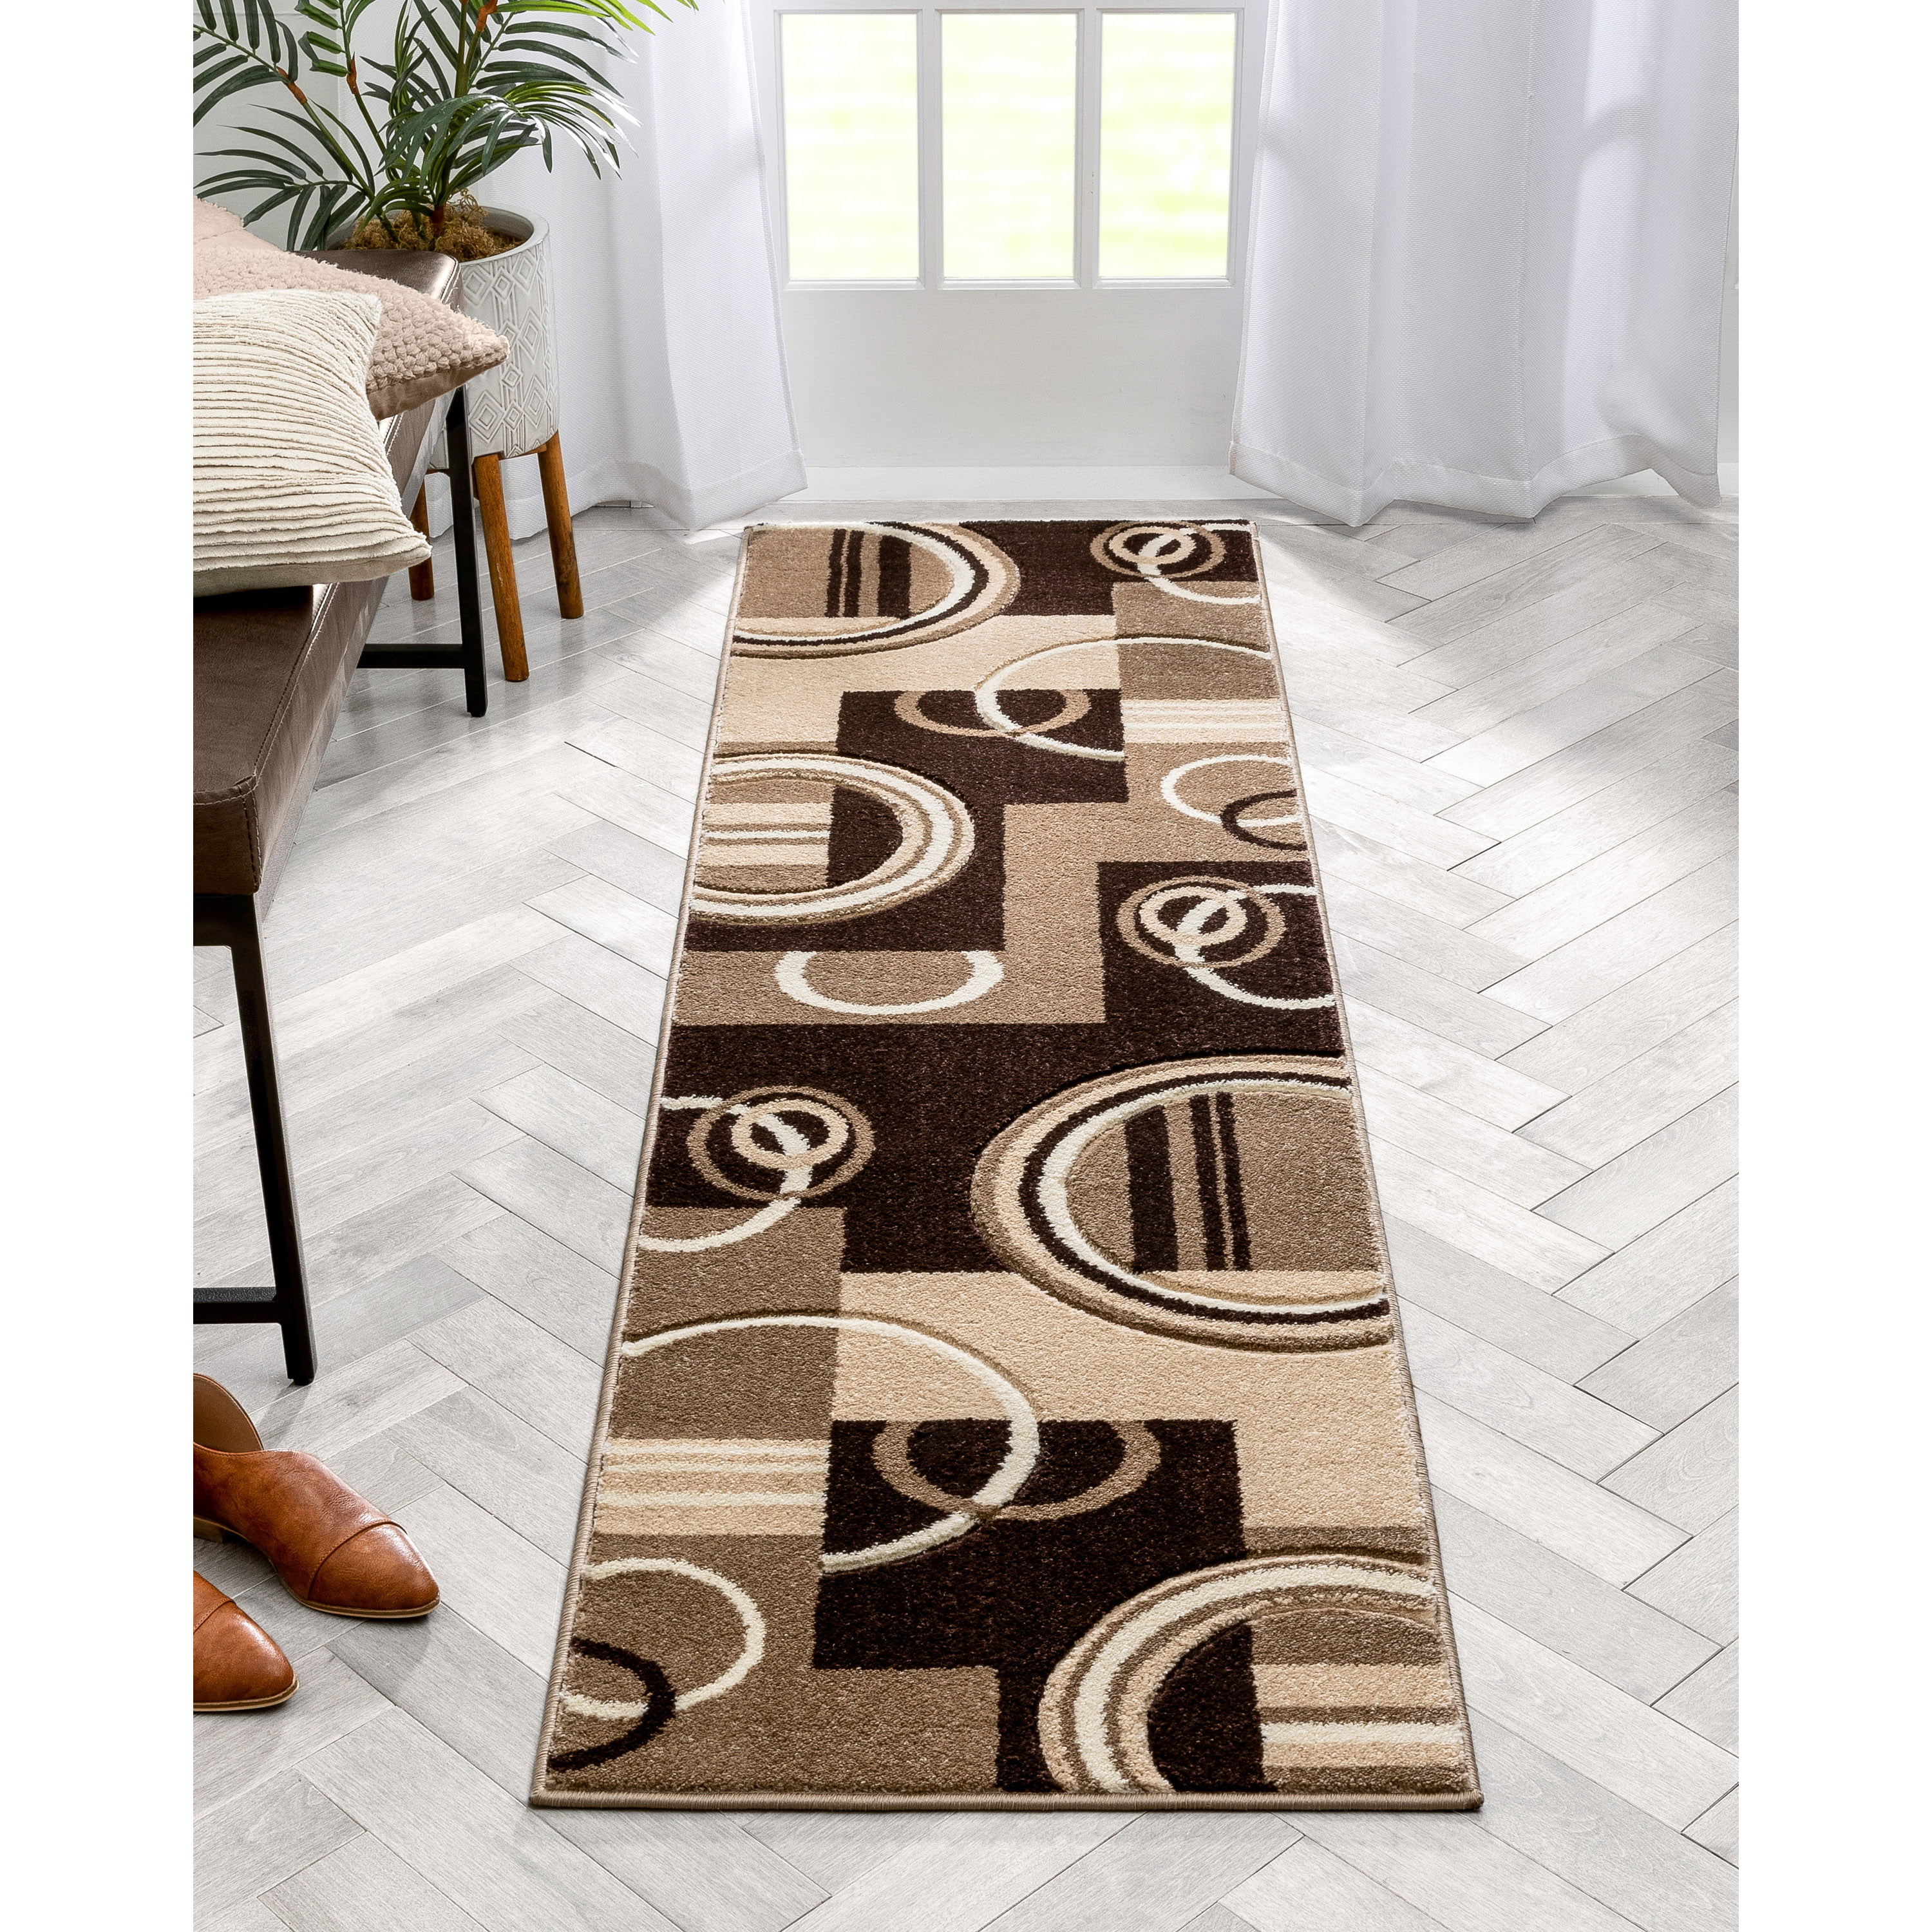 Long Brown Geometric Hallway RunnerModern Border Carpet RunnerBedside Rug 